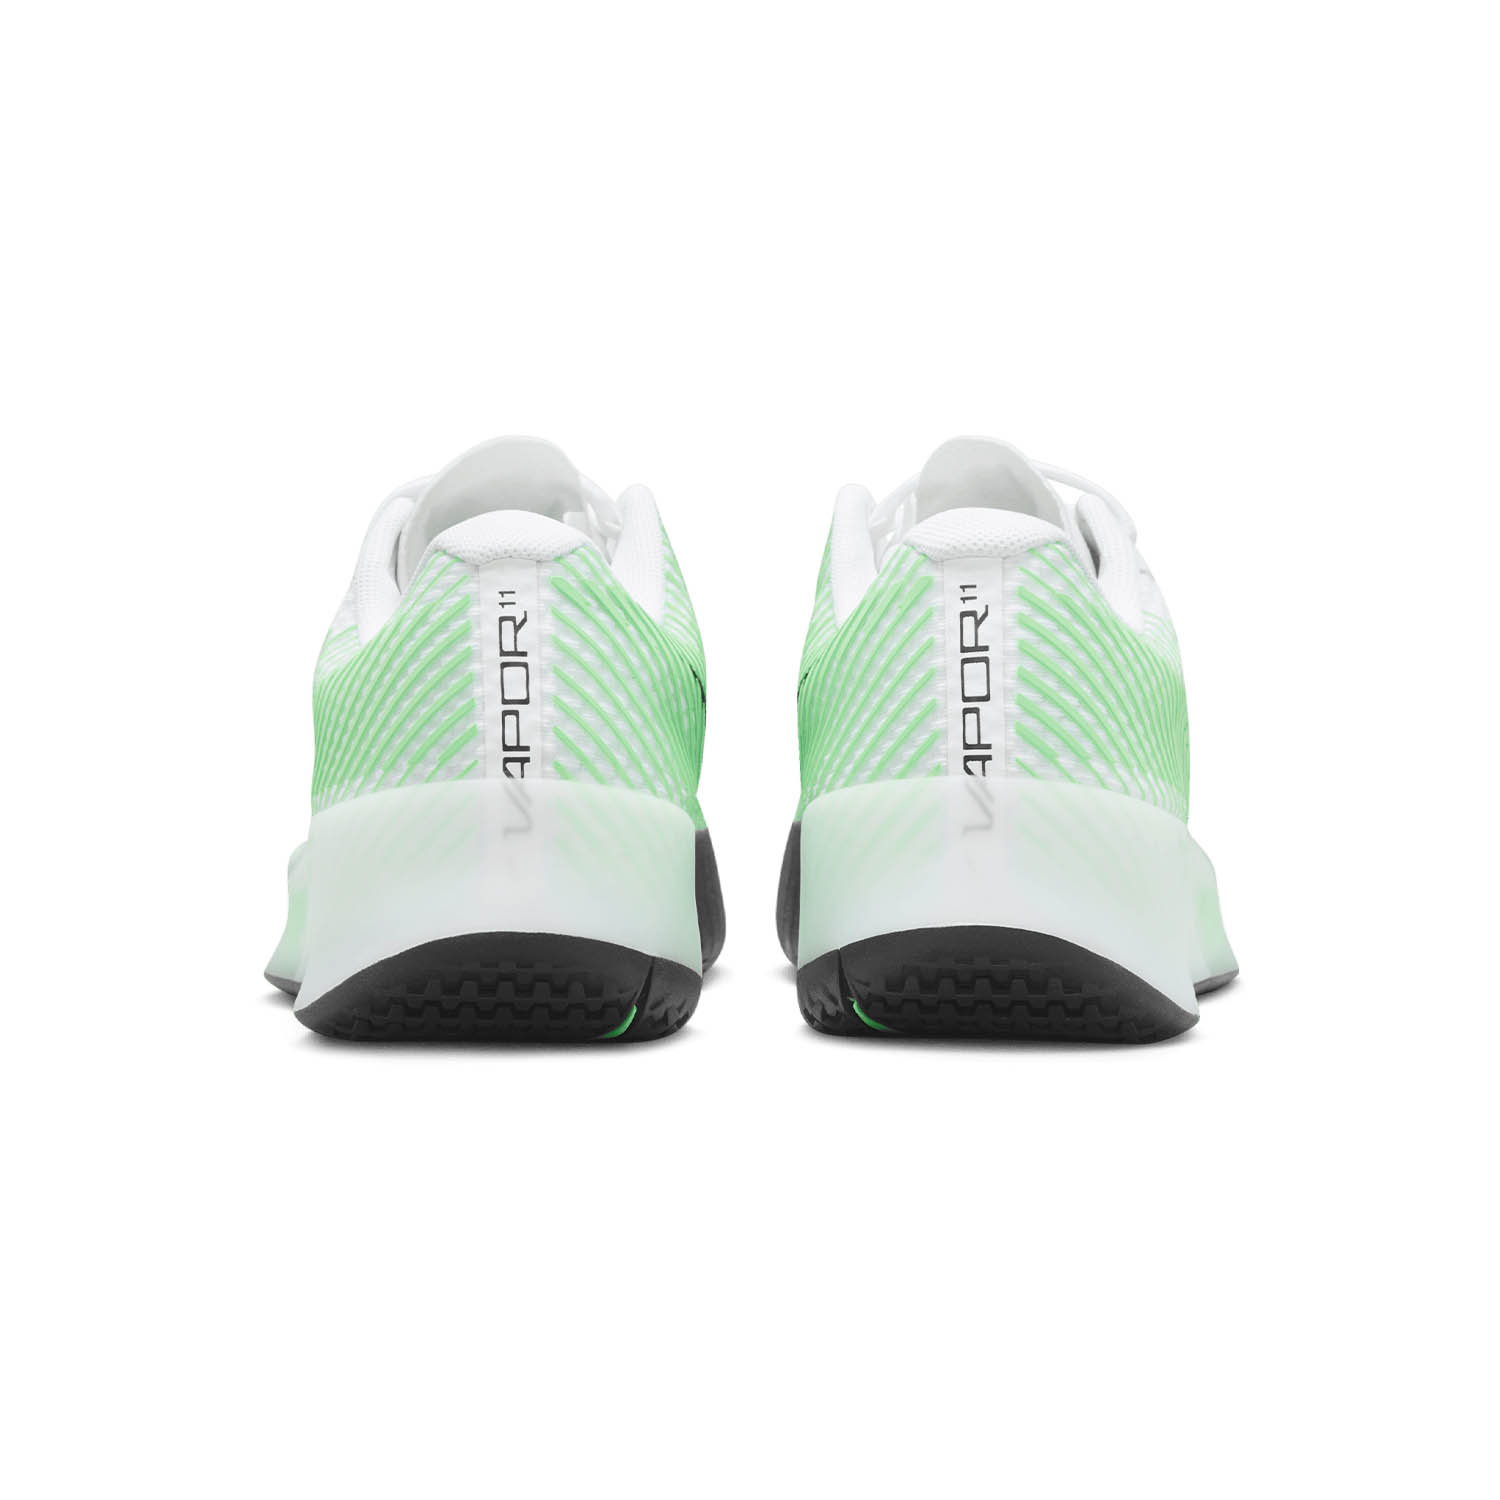 Nike Court Air Zoom Vapor 11 HC - White/Black/Poison Green